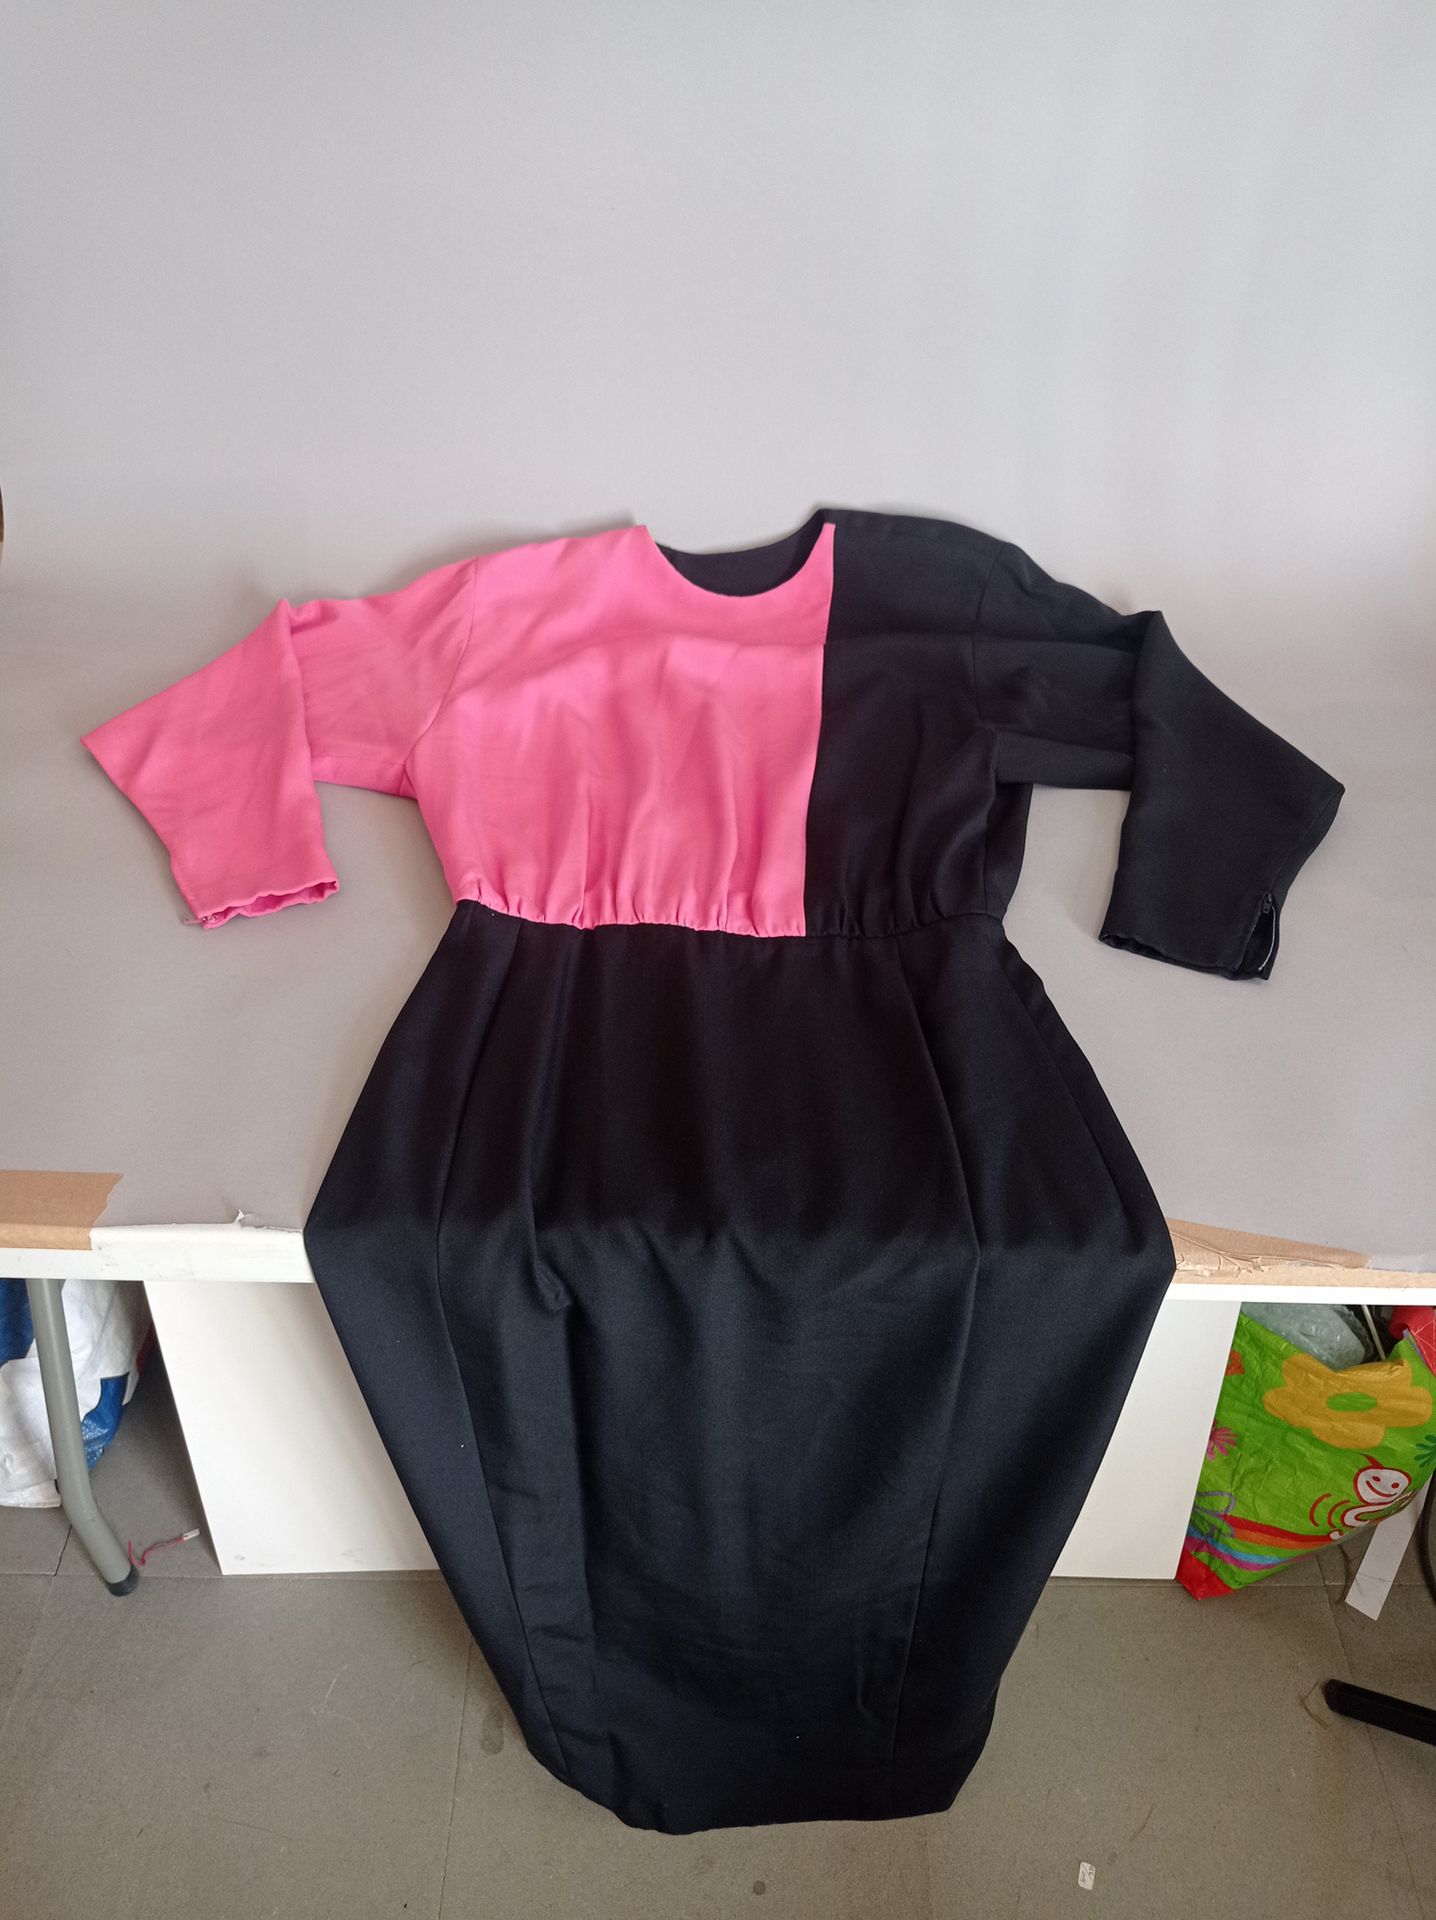 CHRISTIAN DIOR PARIS Pink and black dress, snap back